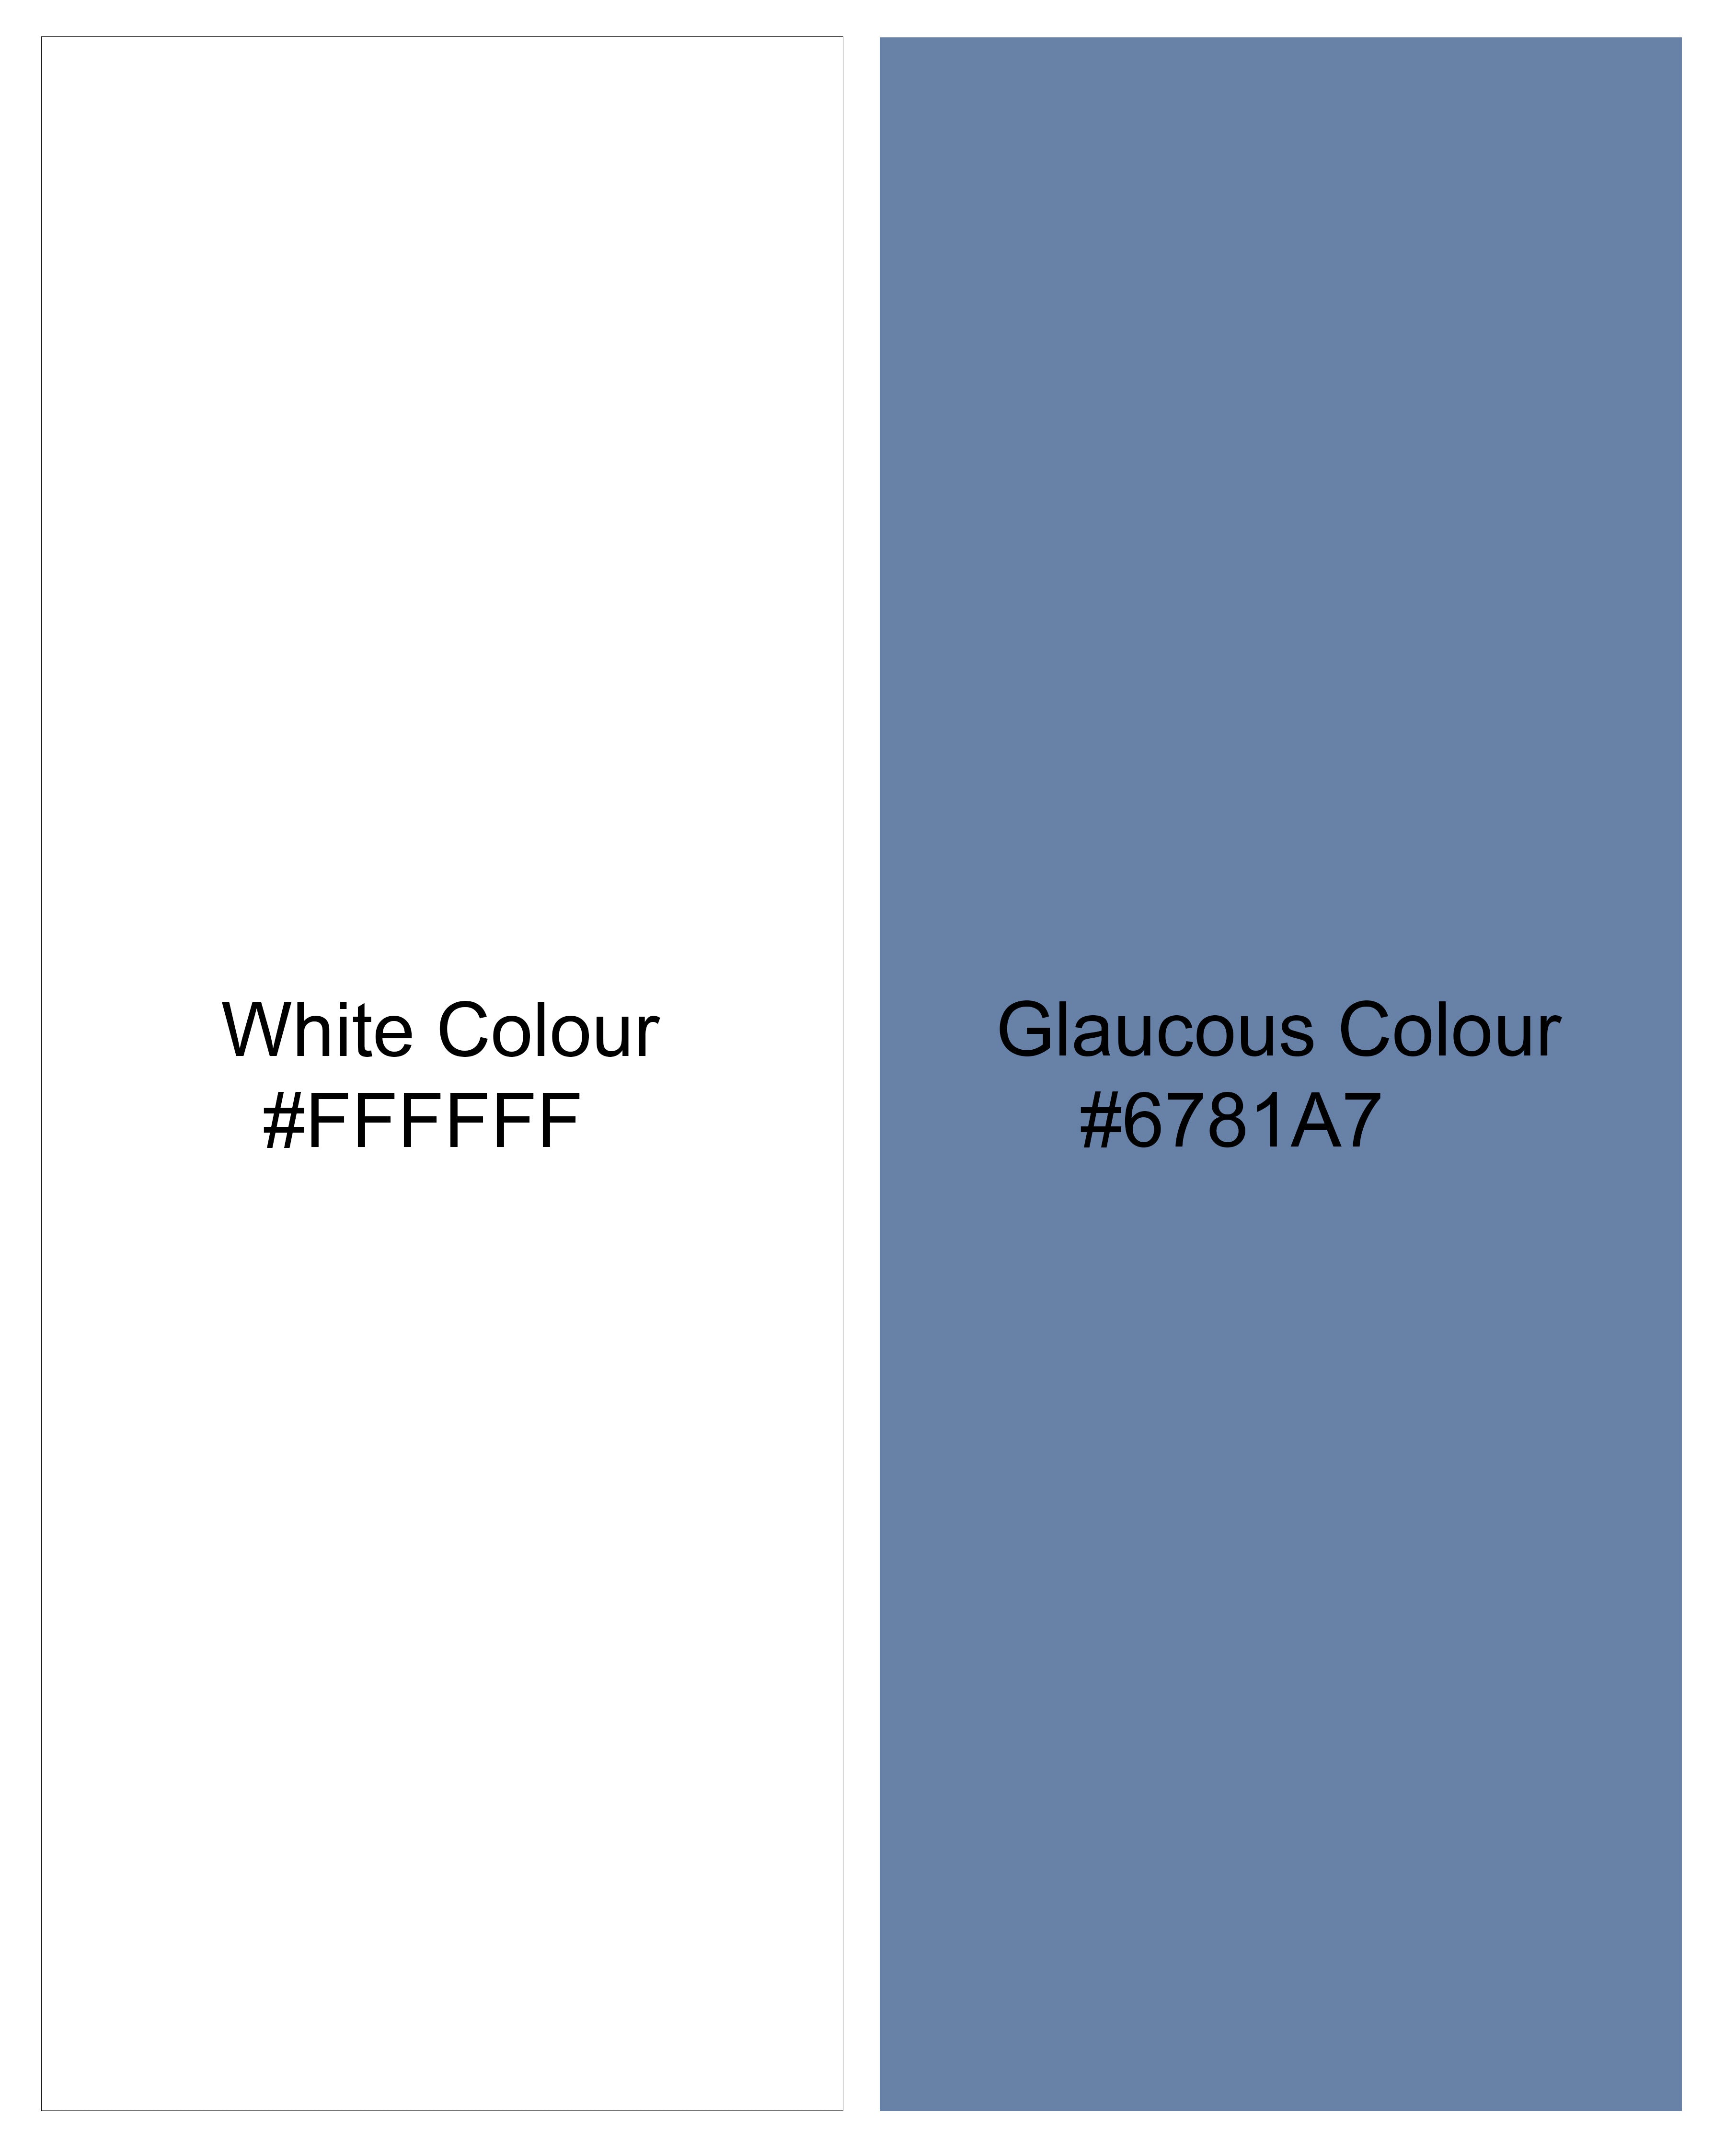 Bright White with Glaucous Blue Dobby Textured Premium Giza Cotton Shirt 9302-WCC-38,9302-WCC-H-38,9302-WCC-39,9302-WCC-H-39,9302-WCC-40,9302-WCC-H-40,9302-WCC-42,9302-WCC-H-42,9302-WCC-44,9302-WCC-H-44,9302-WCC-46,9302-WCC-H-46,9302-WCC-48,9302-WCC-H-48,9302-WCC-50,9302-WCC-H-50,9302-WCC-52,9302-WCC-H-52